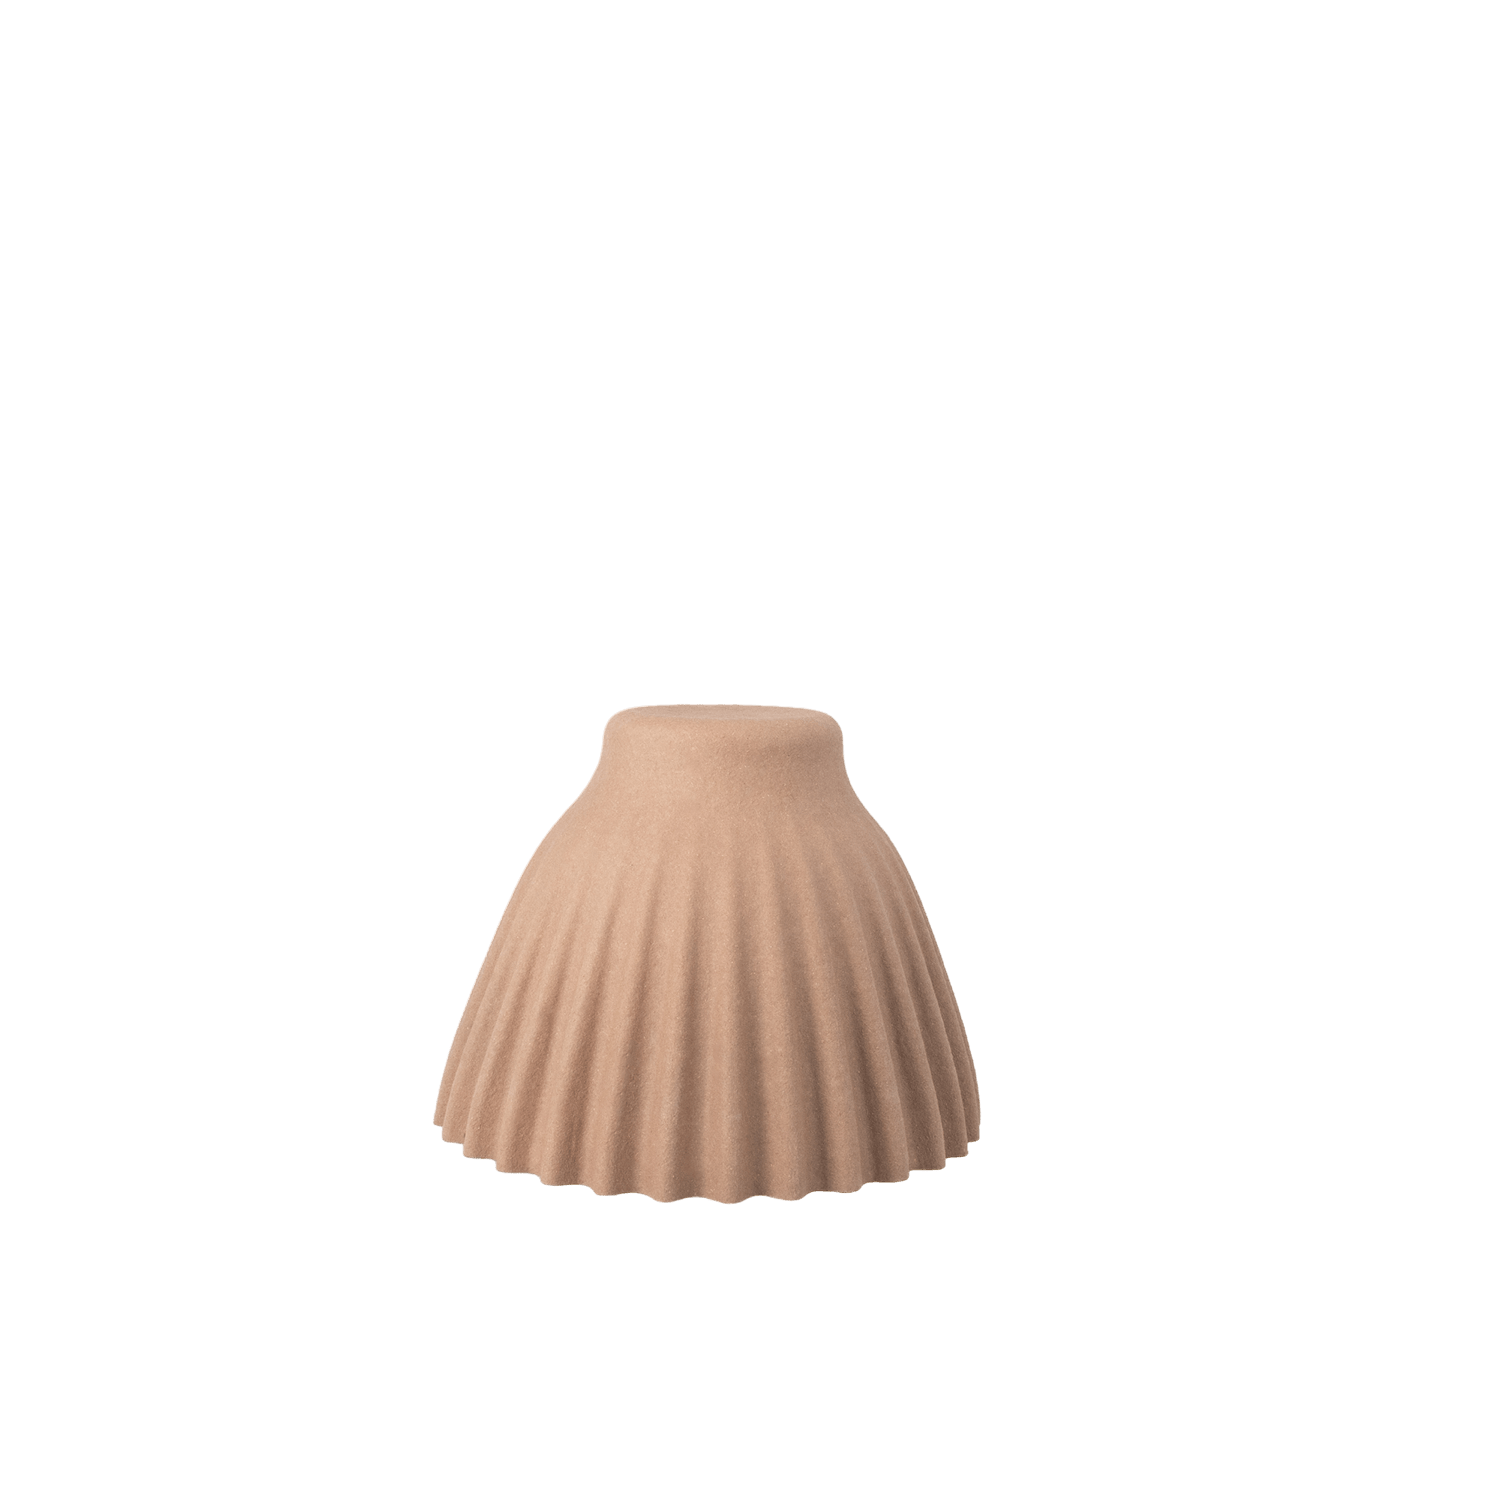 Sprout Pendant Lamp - Paper Paste Living